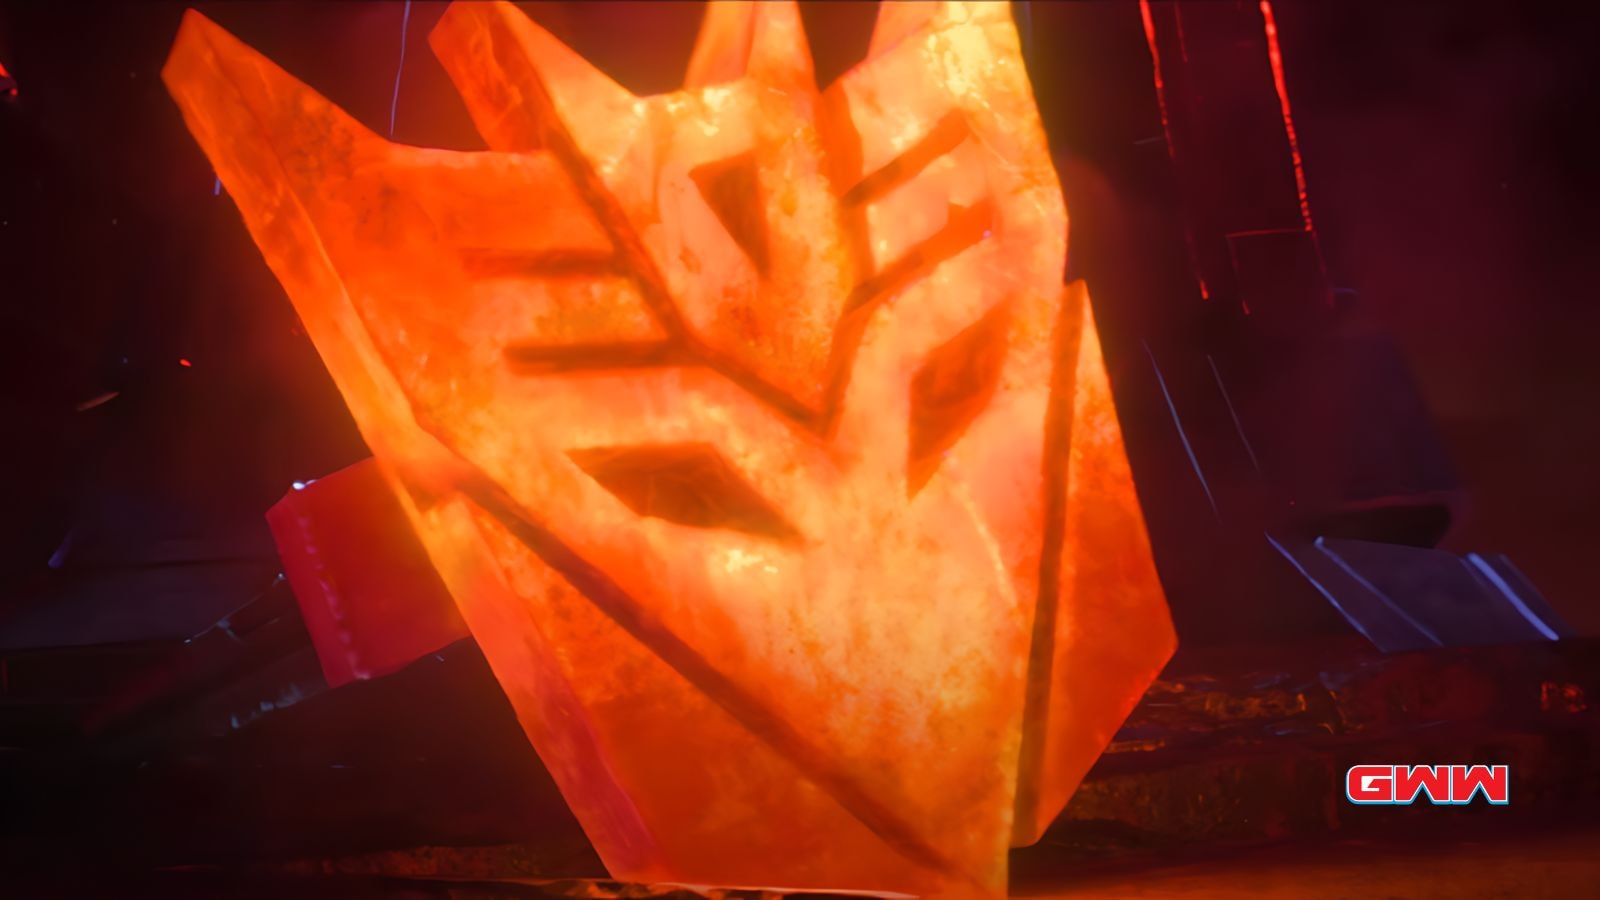 Glowing orange Decepticon symbol on a dark background.